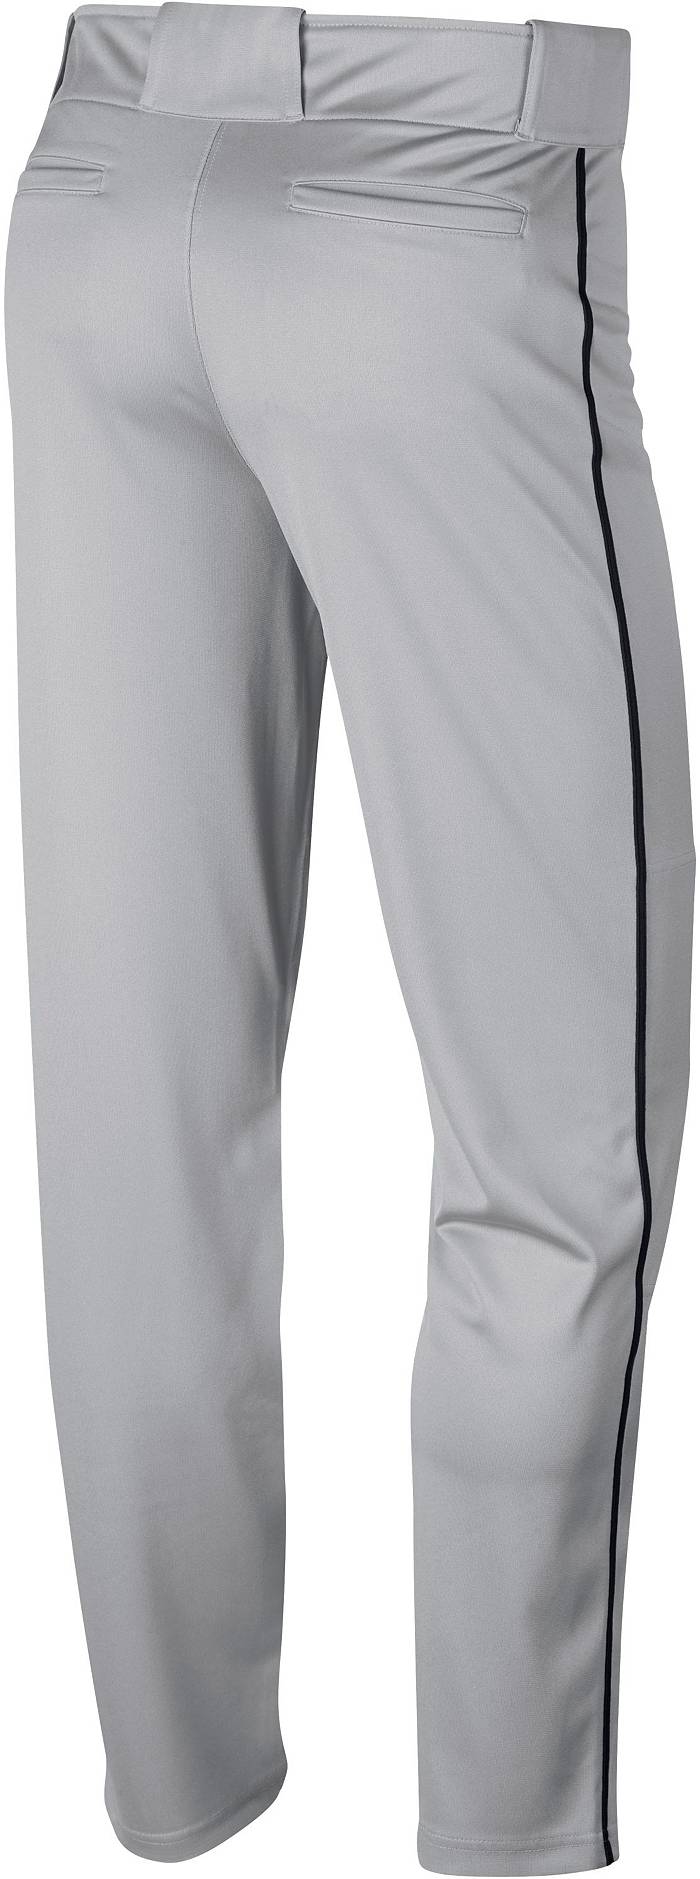 CSU Buccaneers Nike Dri-Fit Baseball Pants Men's Navy/Cream Used M